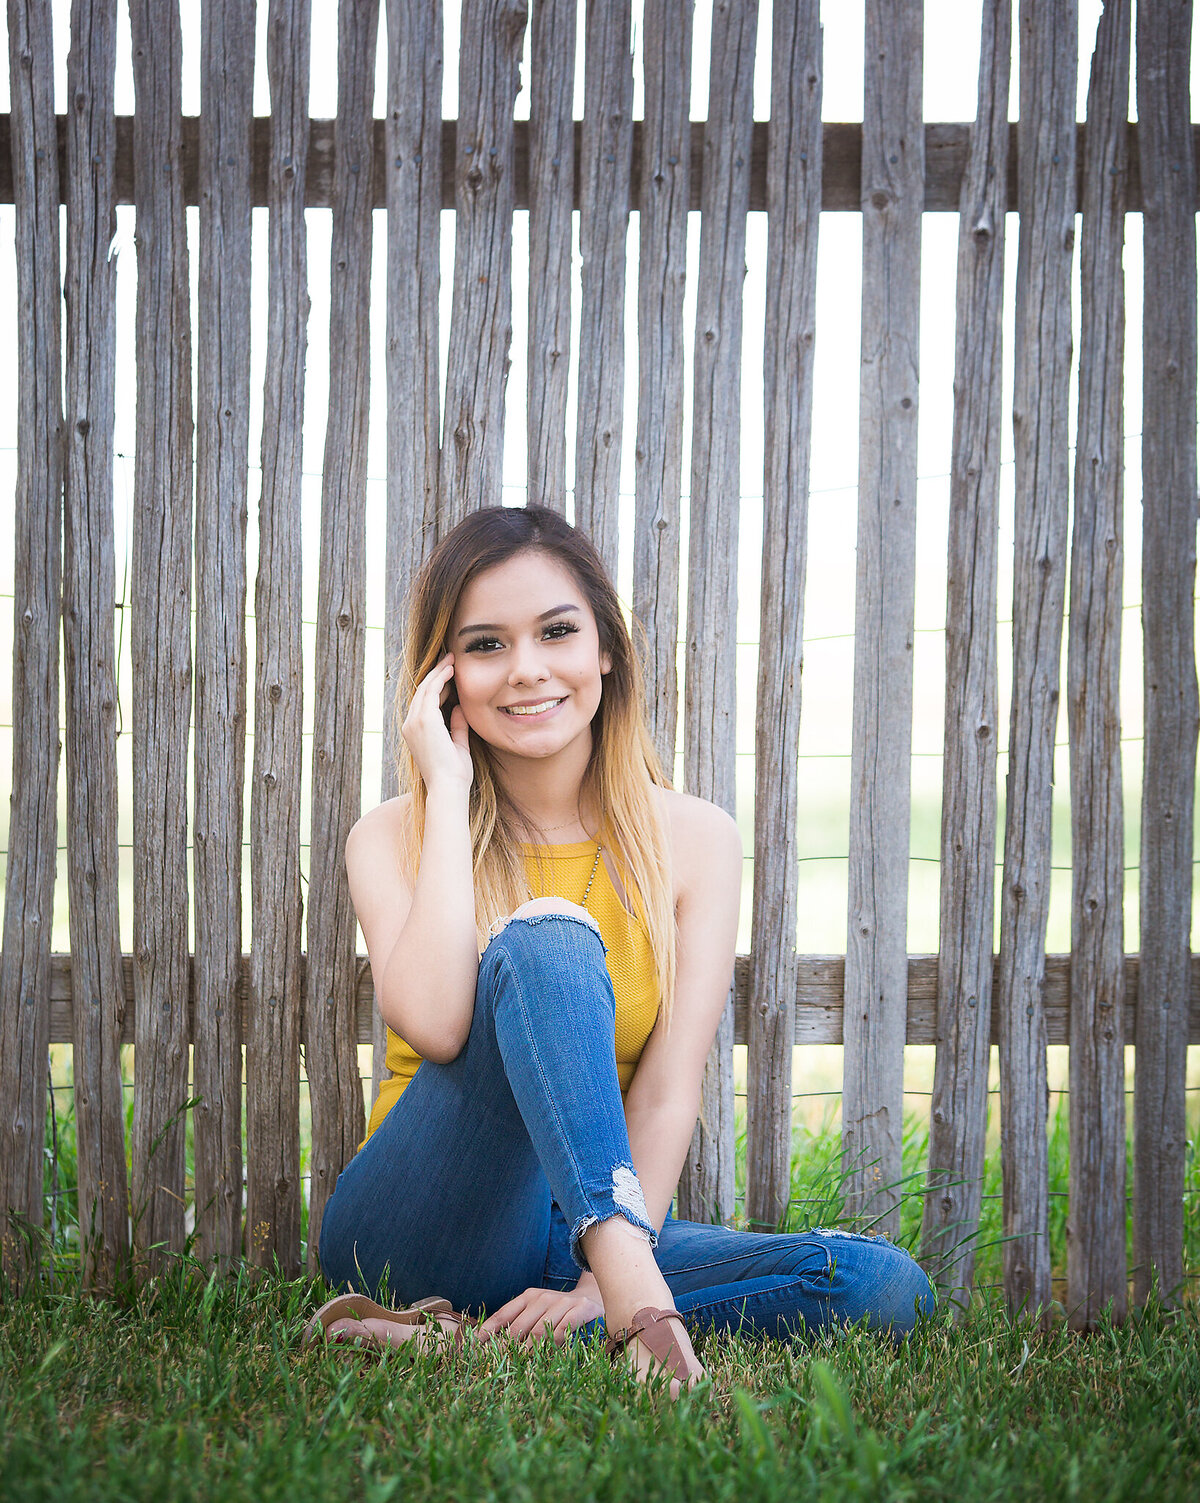 Smiling senior girl sitting next to wooden fence